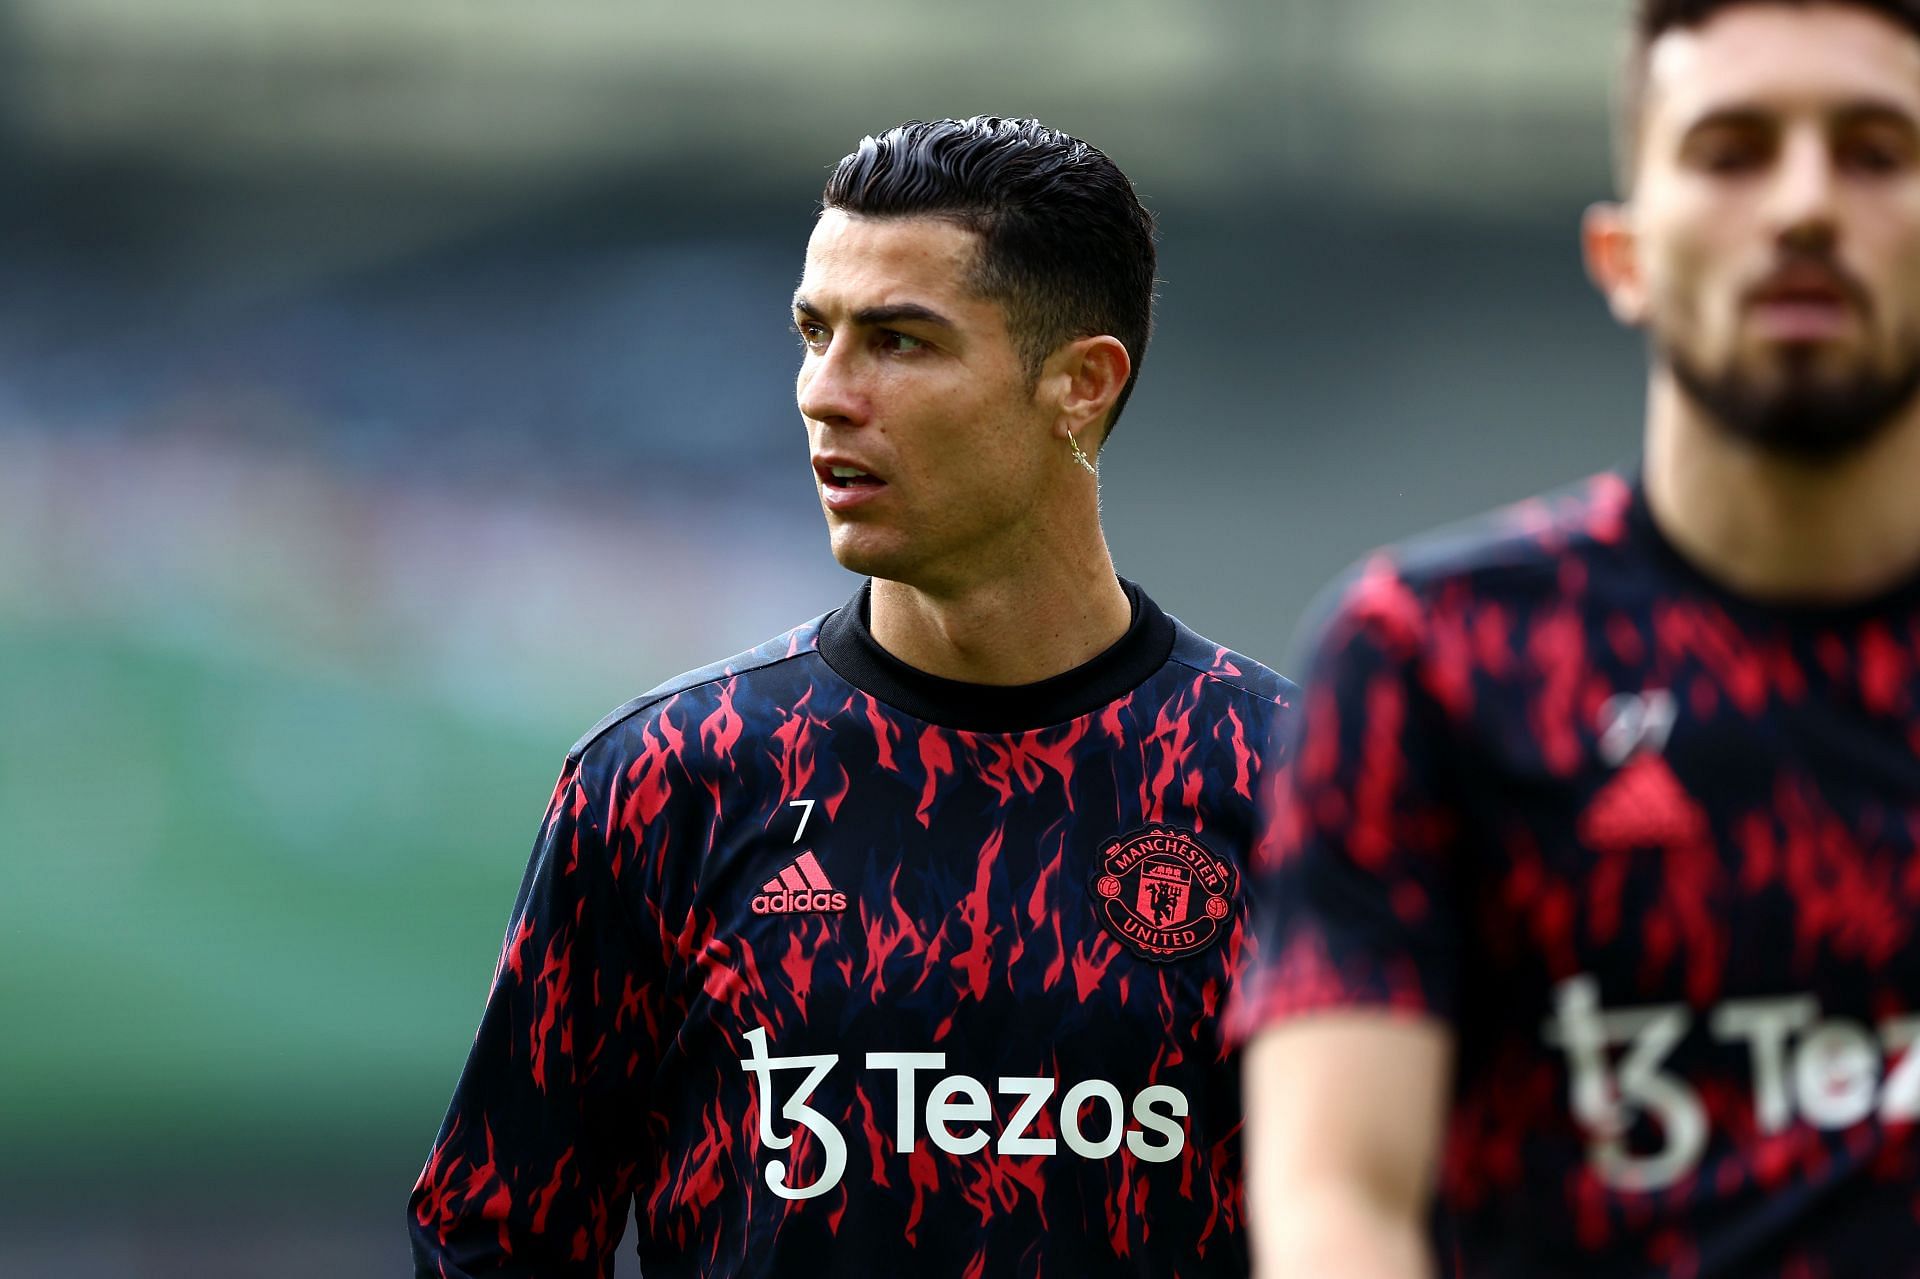 Ronaldo Manchester United transfer: Why shirt sales won't balance